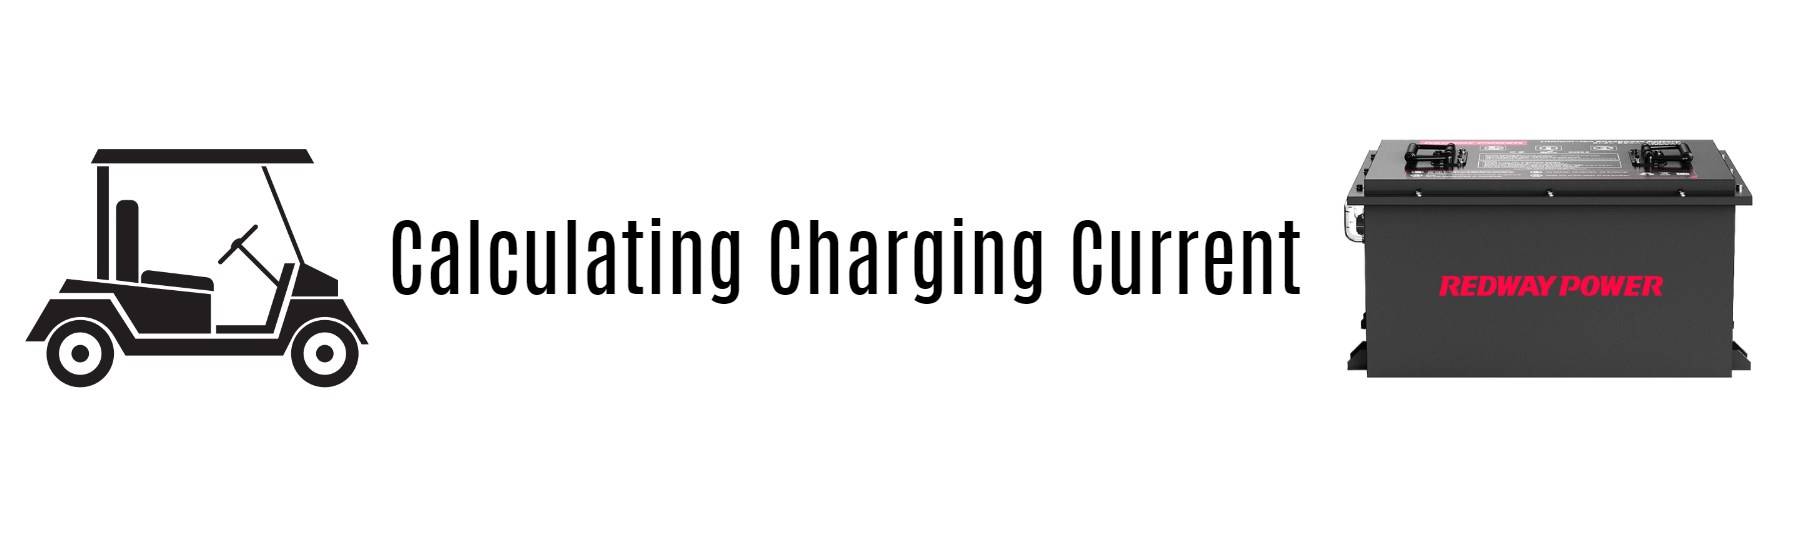 Calculating Charging Current. golf cart lithium battery 48v 100ah app manufacturer